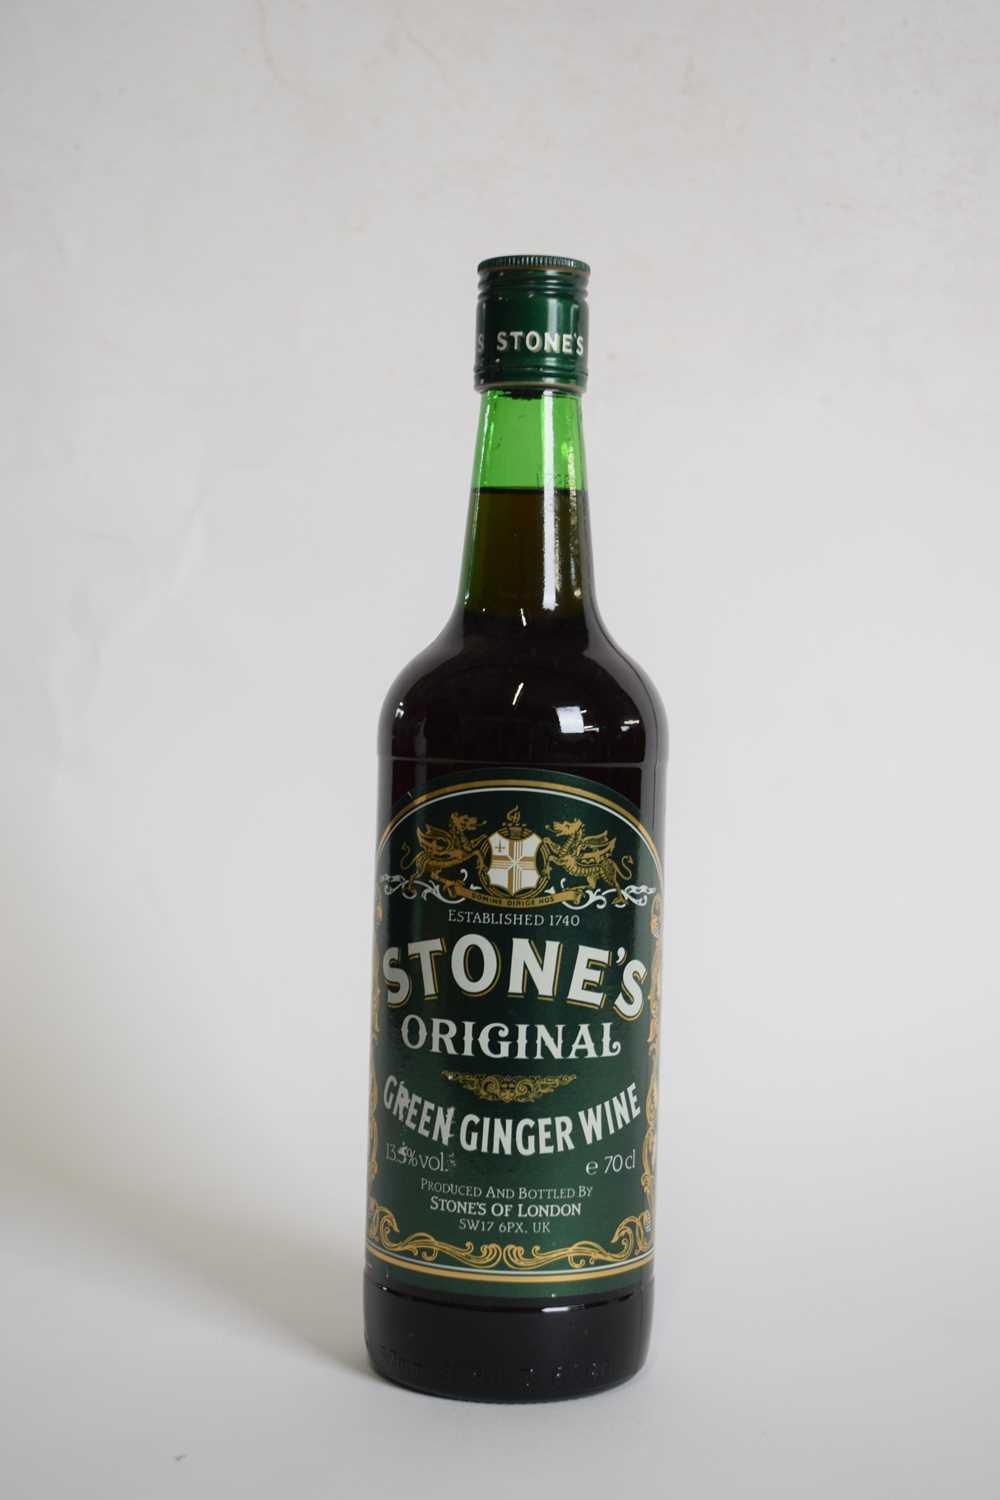 Bottle of Stones Green Ginger wine - Image 2 of 2